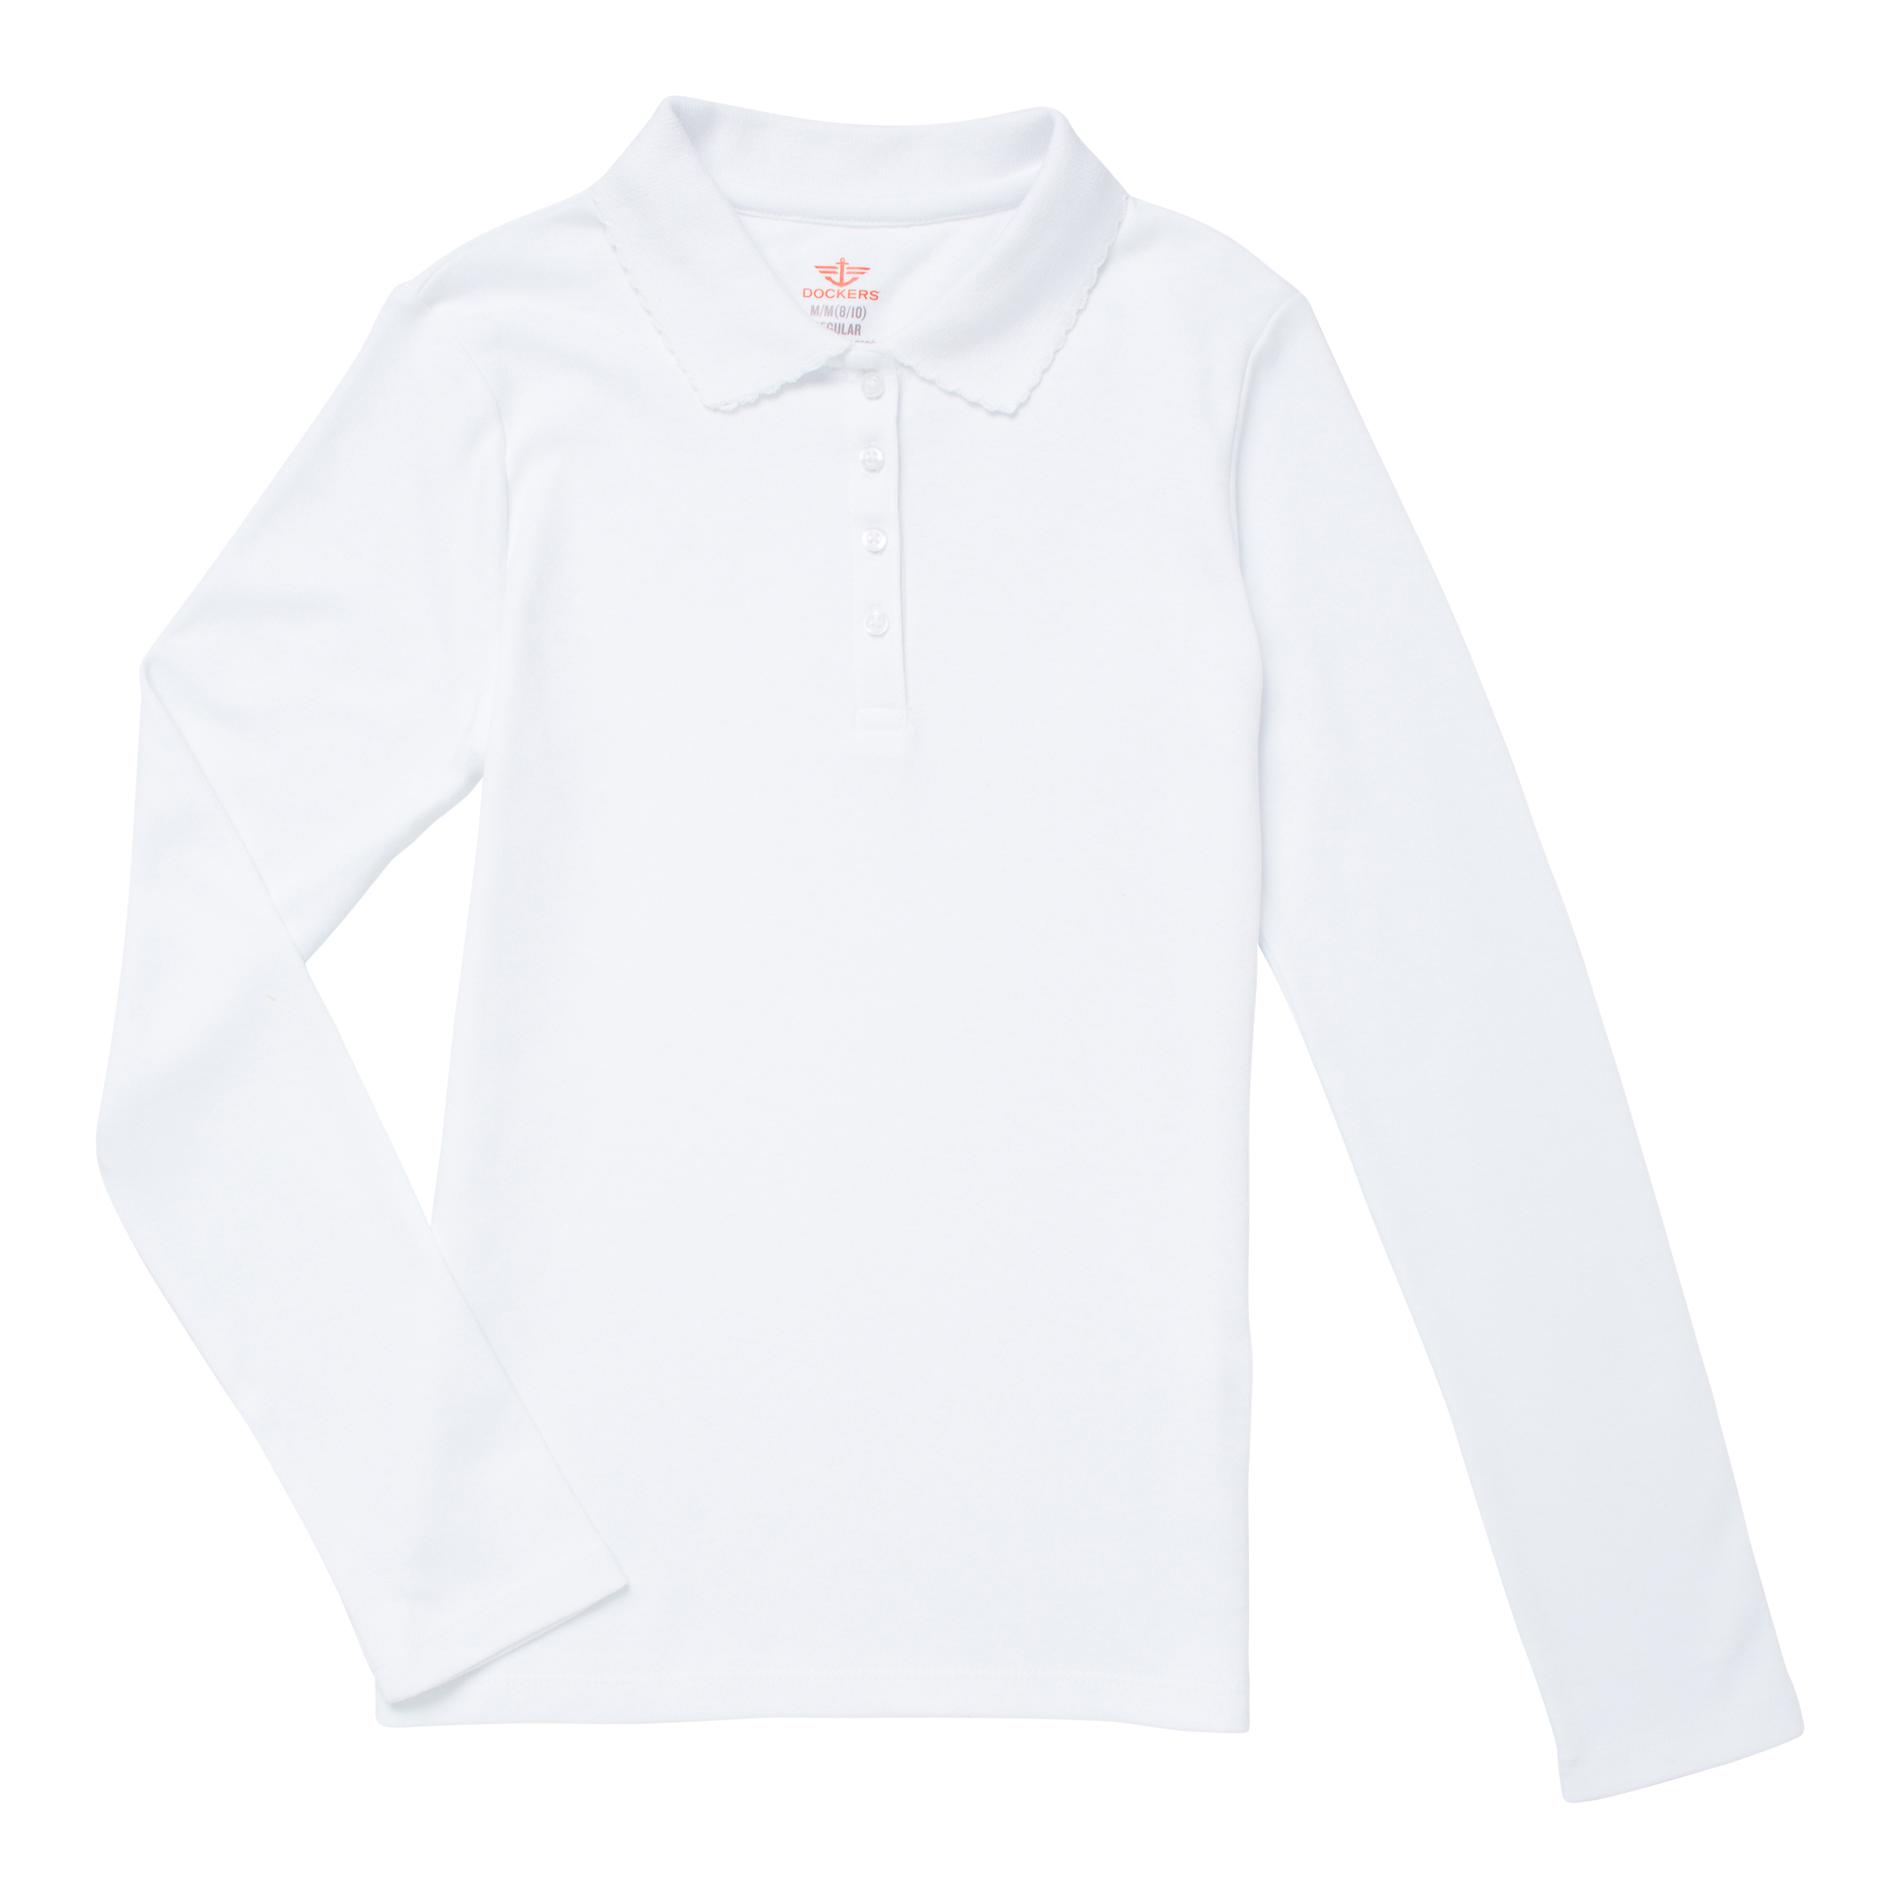 Dockers Girls' Long-Sleeve Polo Shirt